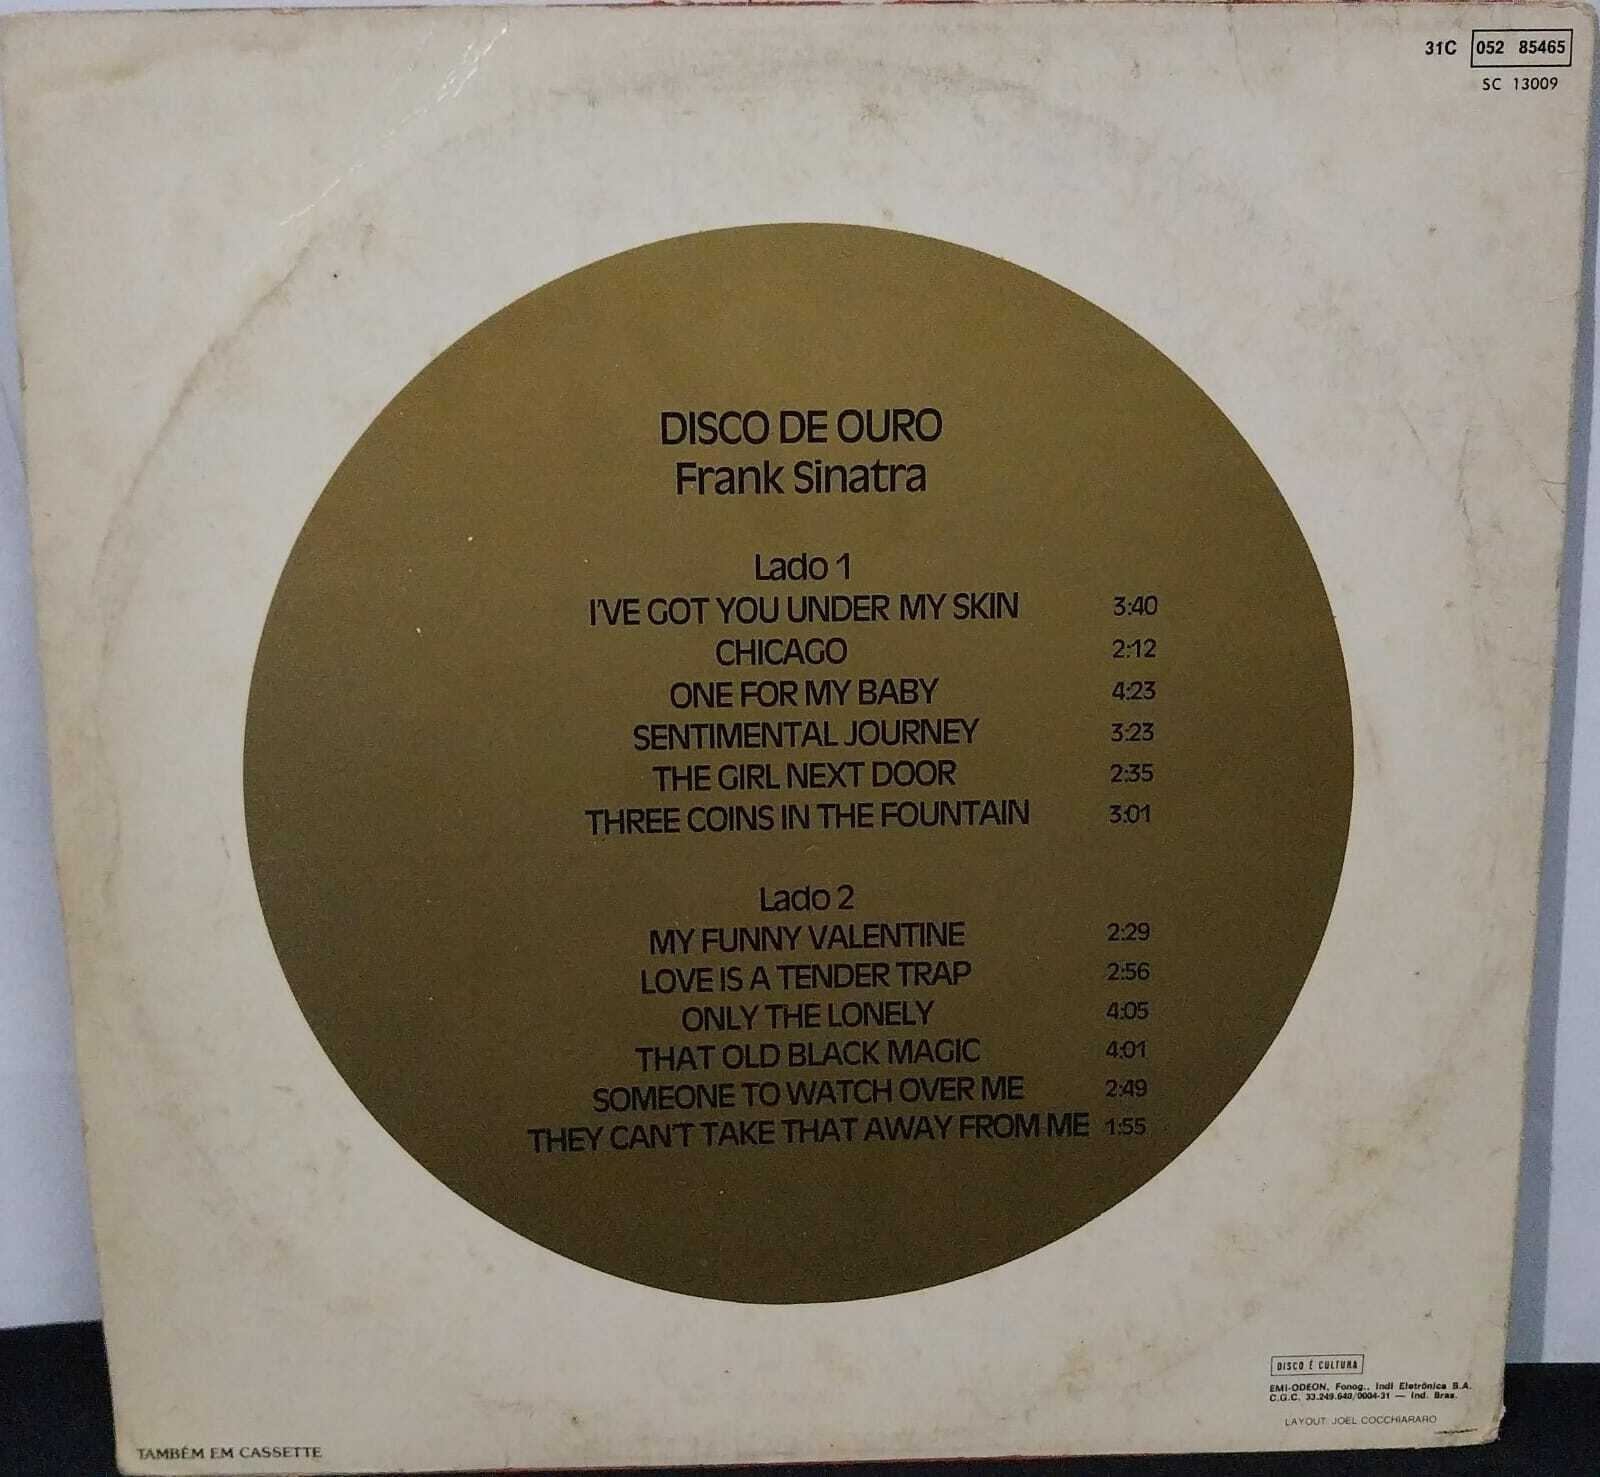 Vinil - Frank Sinatra - O Disco de Ouro